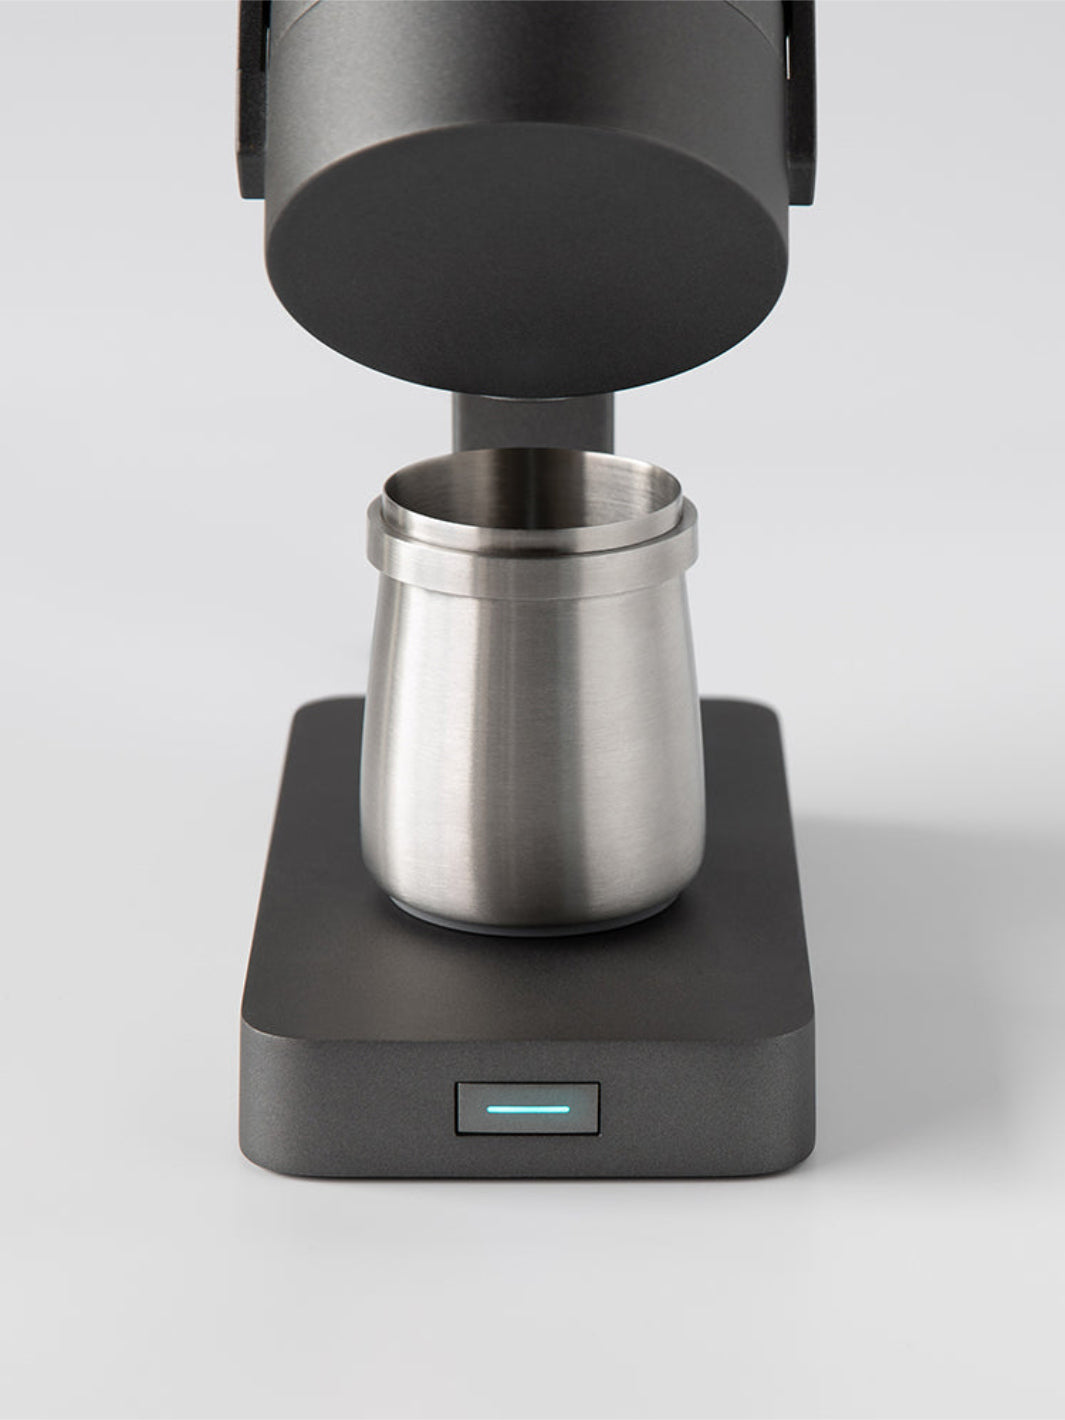 ACAIA Orbit Coffee Grinder (120V) (Mazzer) (Black) (Lightly Used)